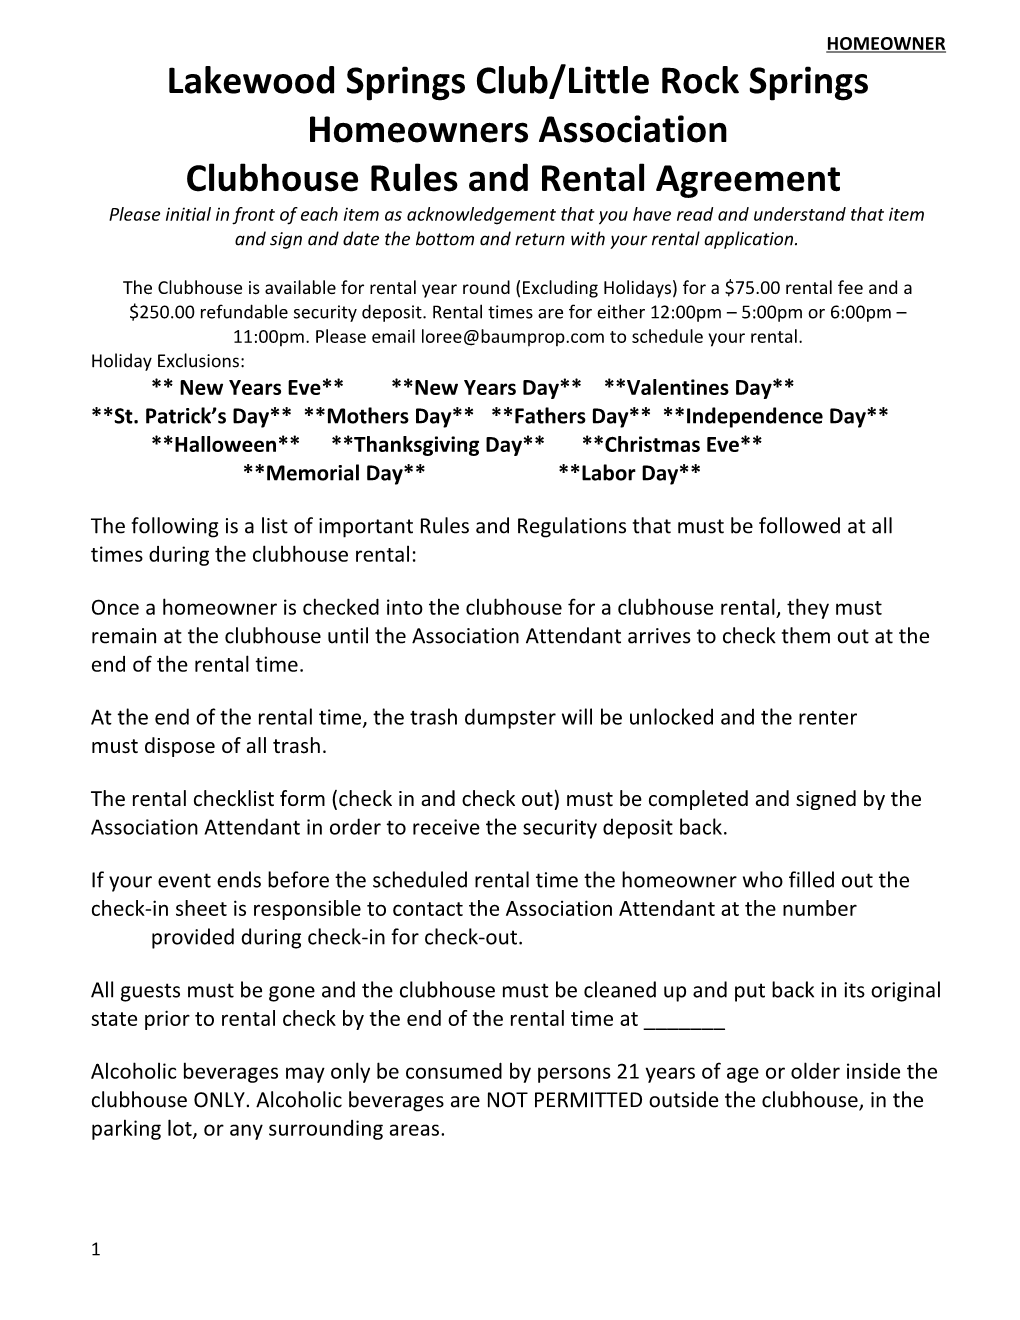 Rental Agreement 2013 Homeowner